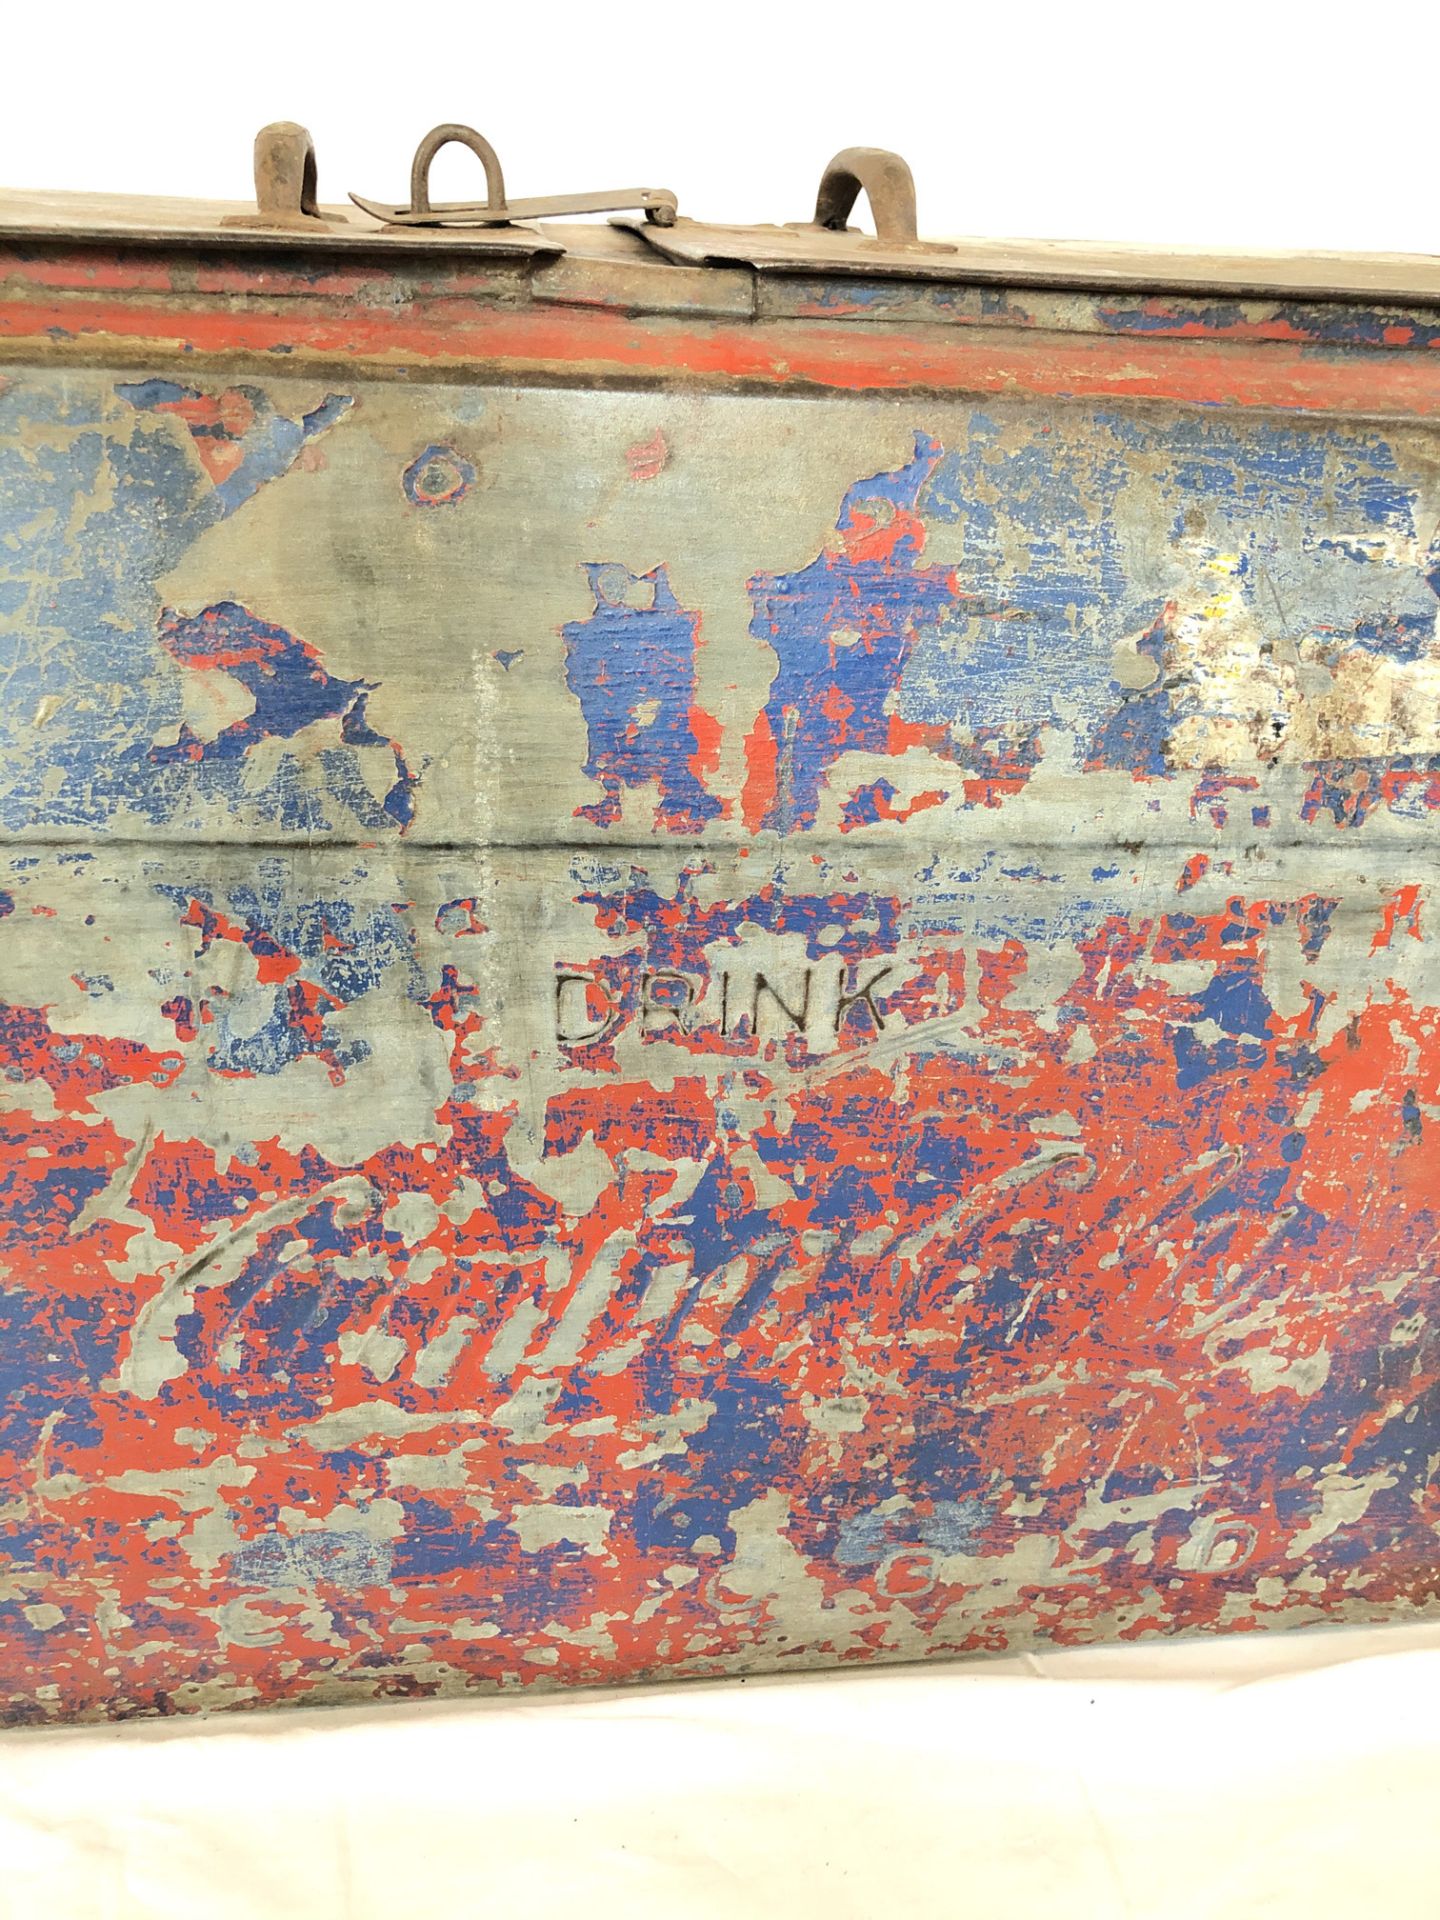 Vintage Campa Cola cooler box - Image 5 of 7